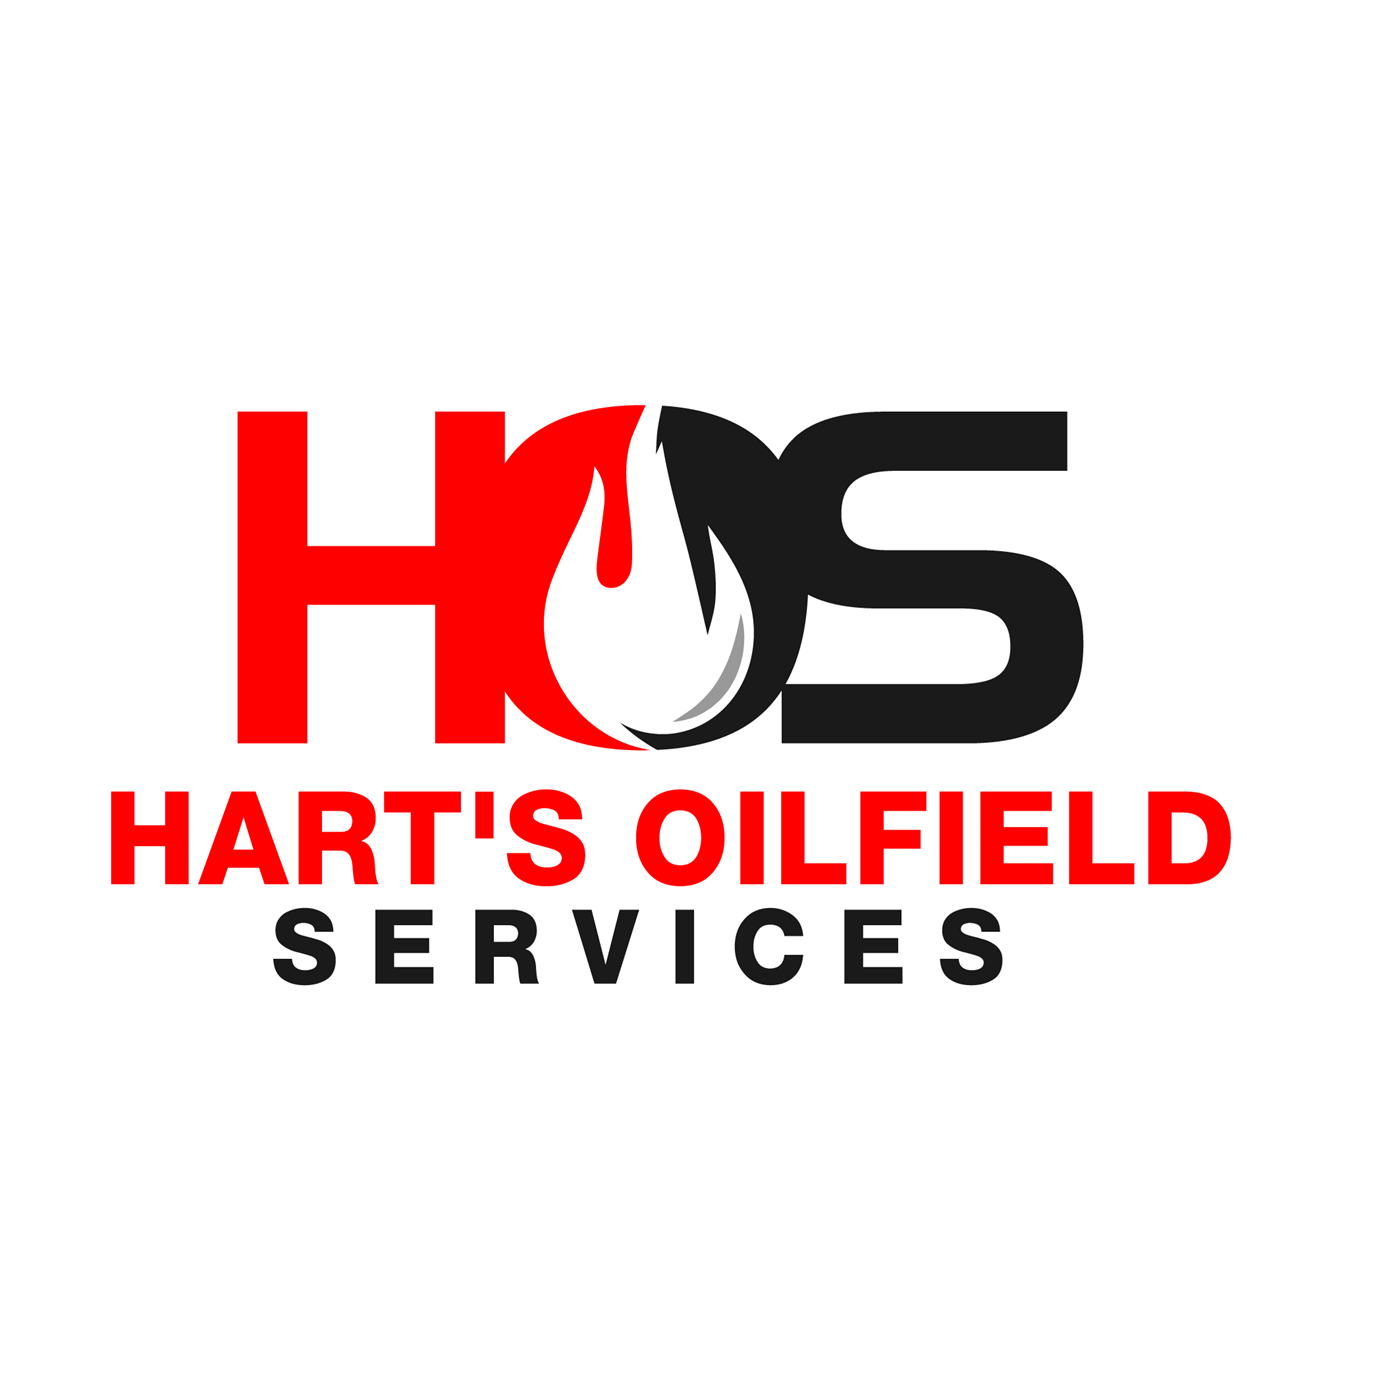 Hart's Oilfield Services logo